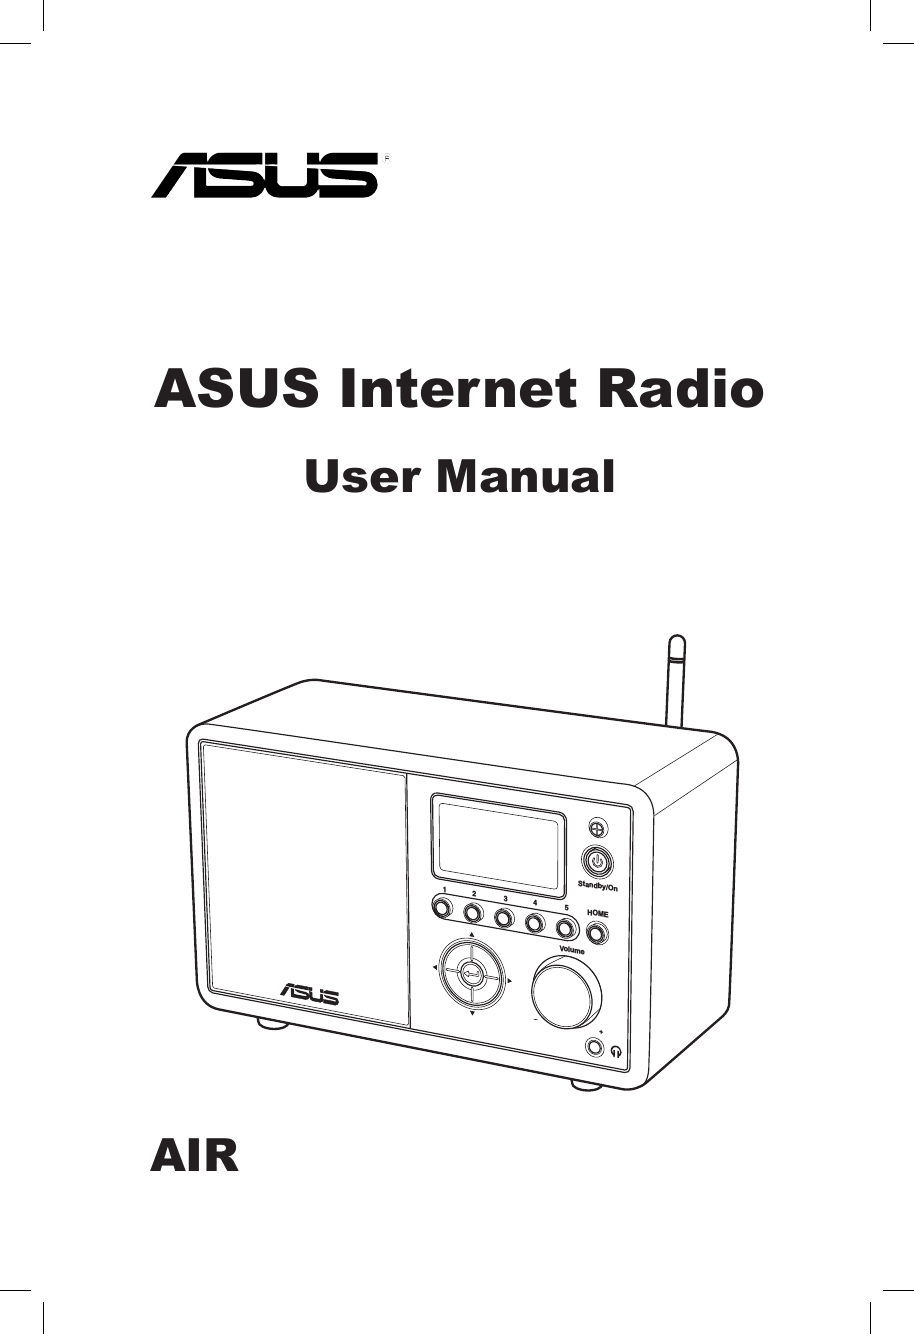 ASUS Internet RadioUser Manual1             2              3             4              5HOMEVolumeStandby/OnAIR